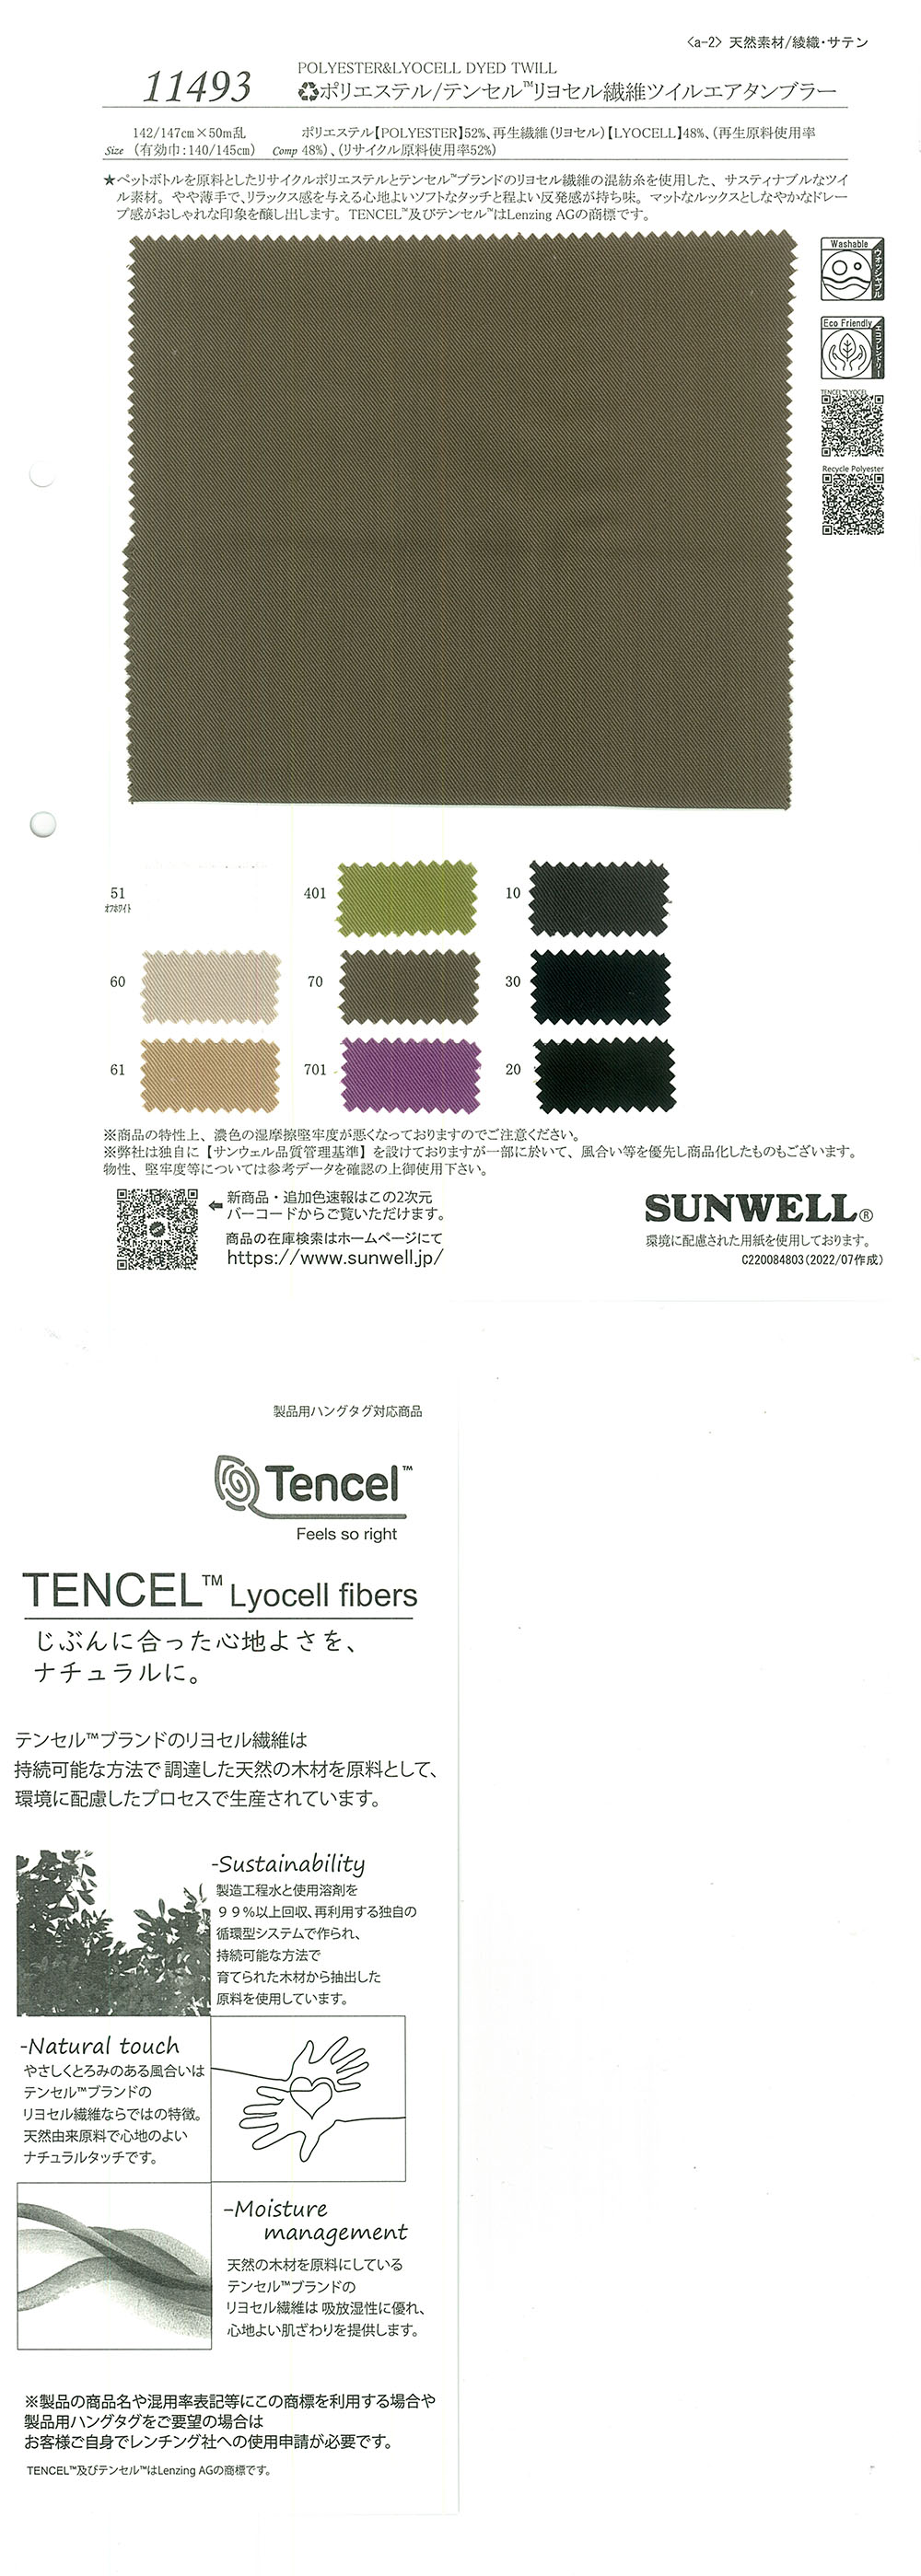 11493 (Li) Polyester/Tencel (TM) Lyocell Fiber Twill Air Tunbler[Textile / Fabric] SUNWELL